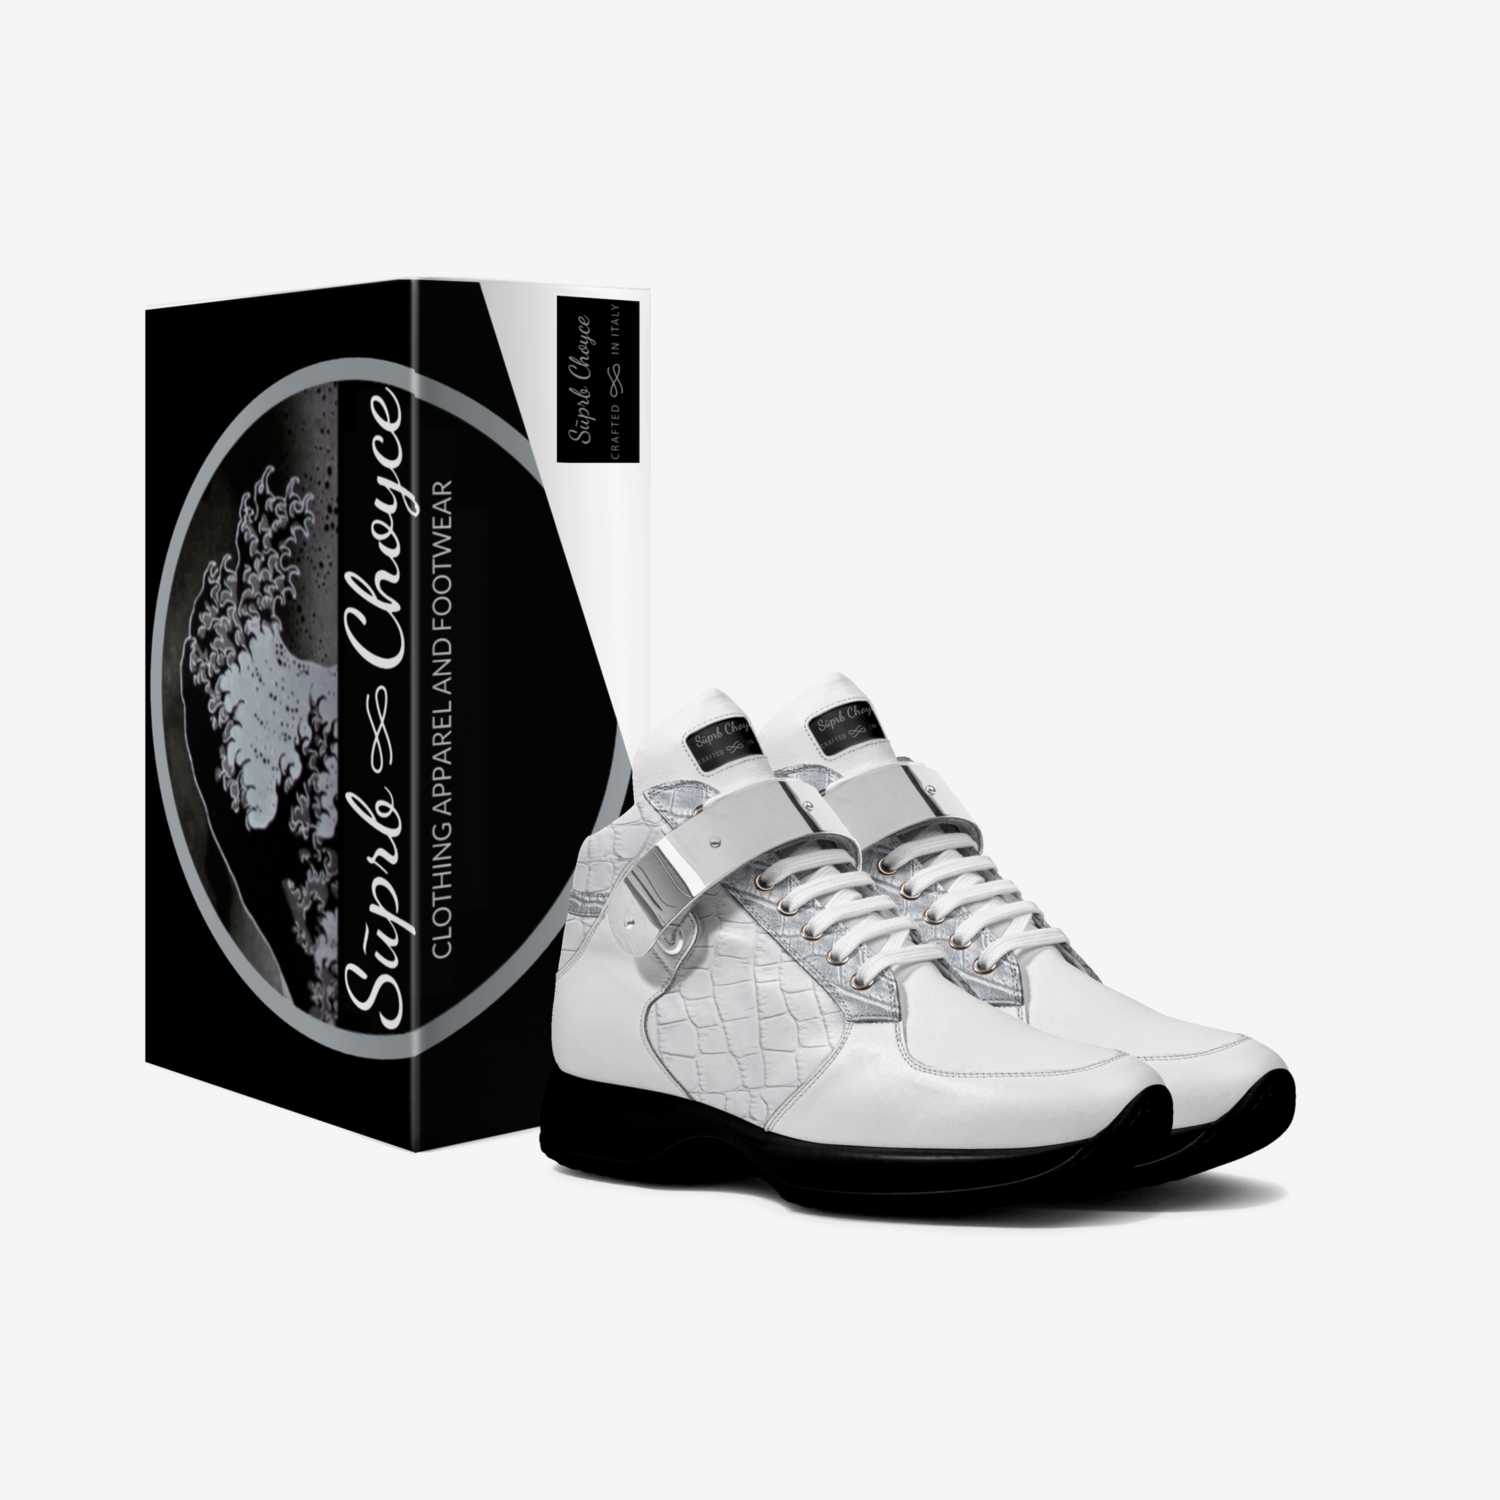 Sūprb Choyce custom made in Italy shoes by Omari Choyce | Box view